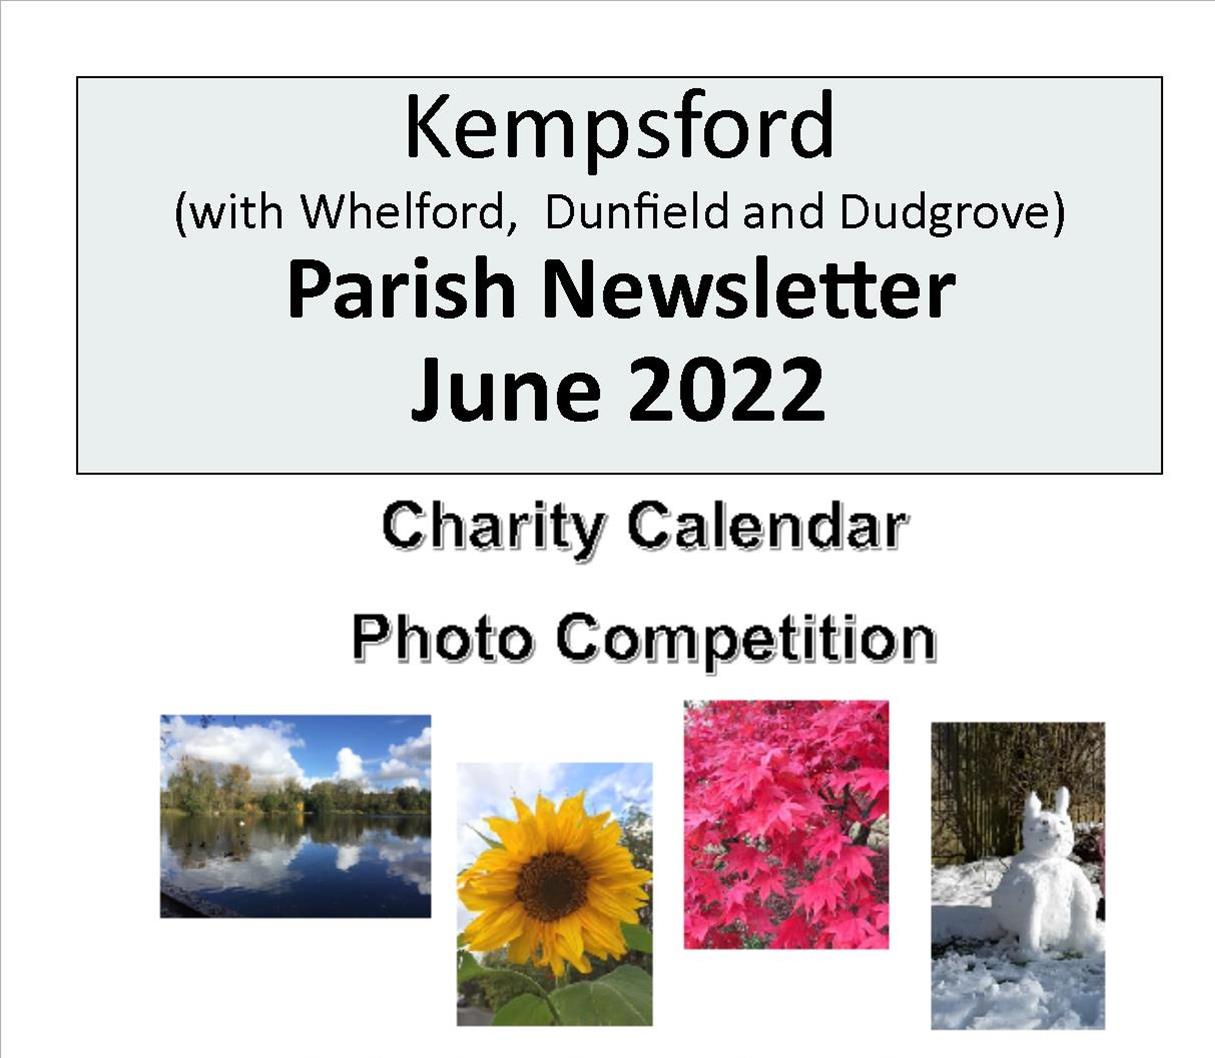 Copy Deadline change for next Parish Newsletter